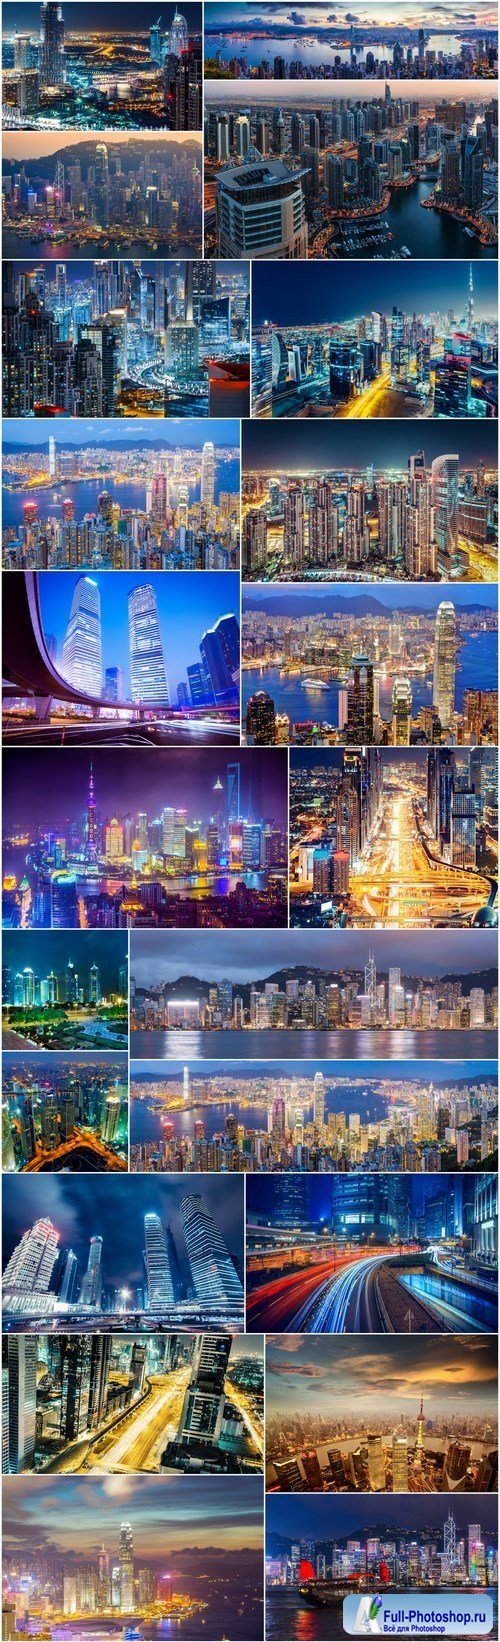 Beautiful night Shanghai, Hong Kong and Dubai 3 - Set of 24xUHQ JPEG Professional Stock Images